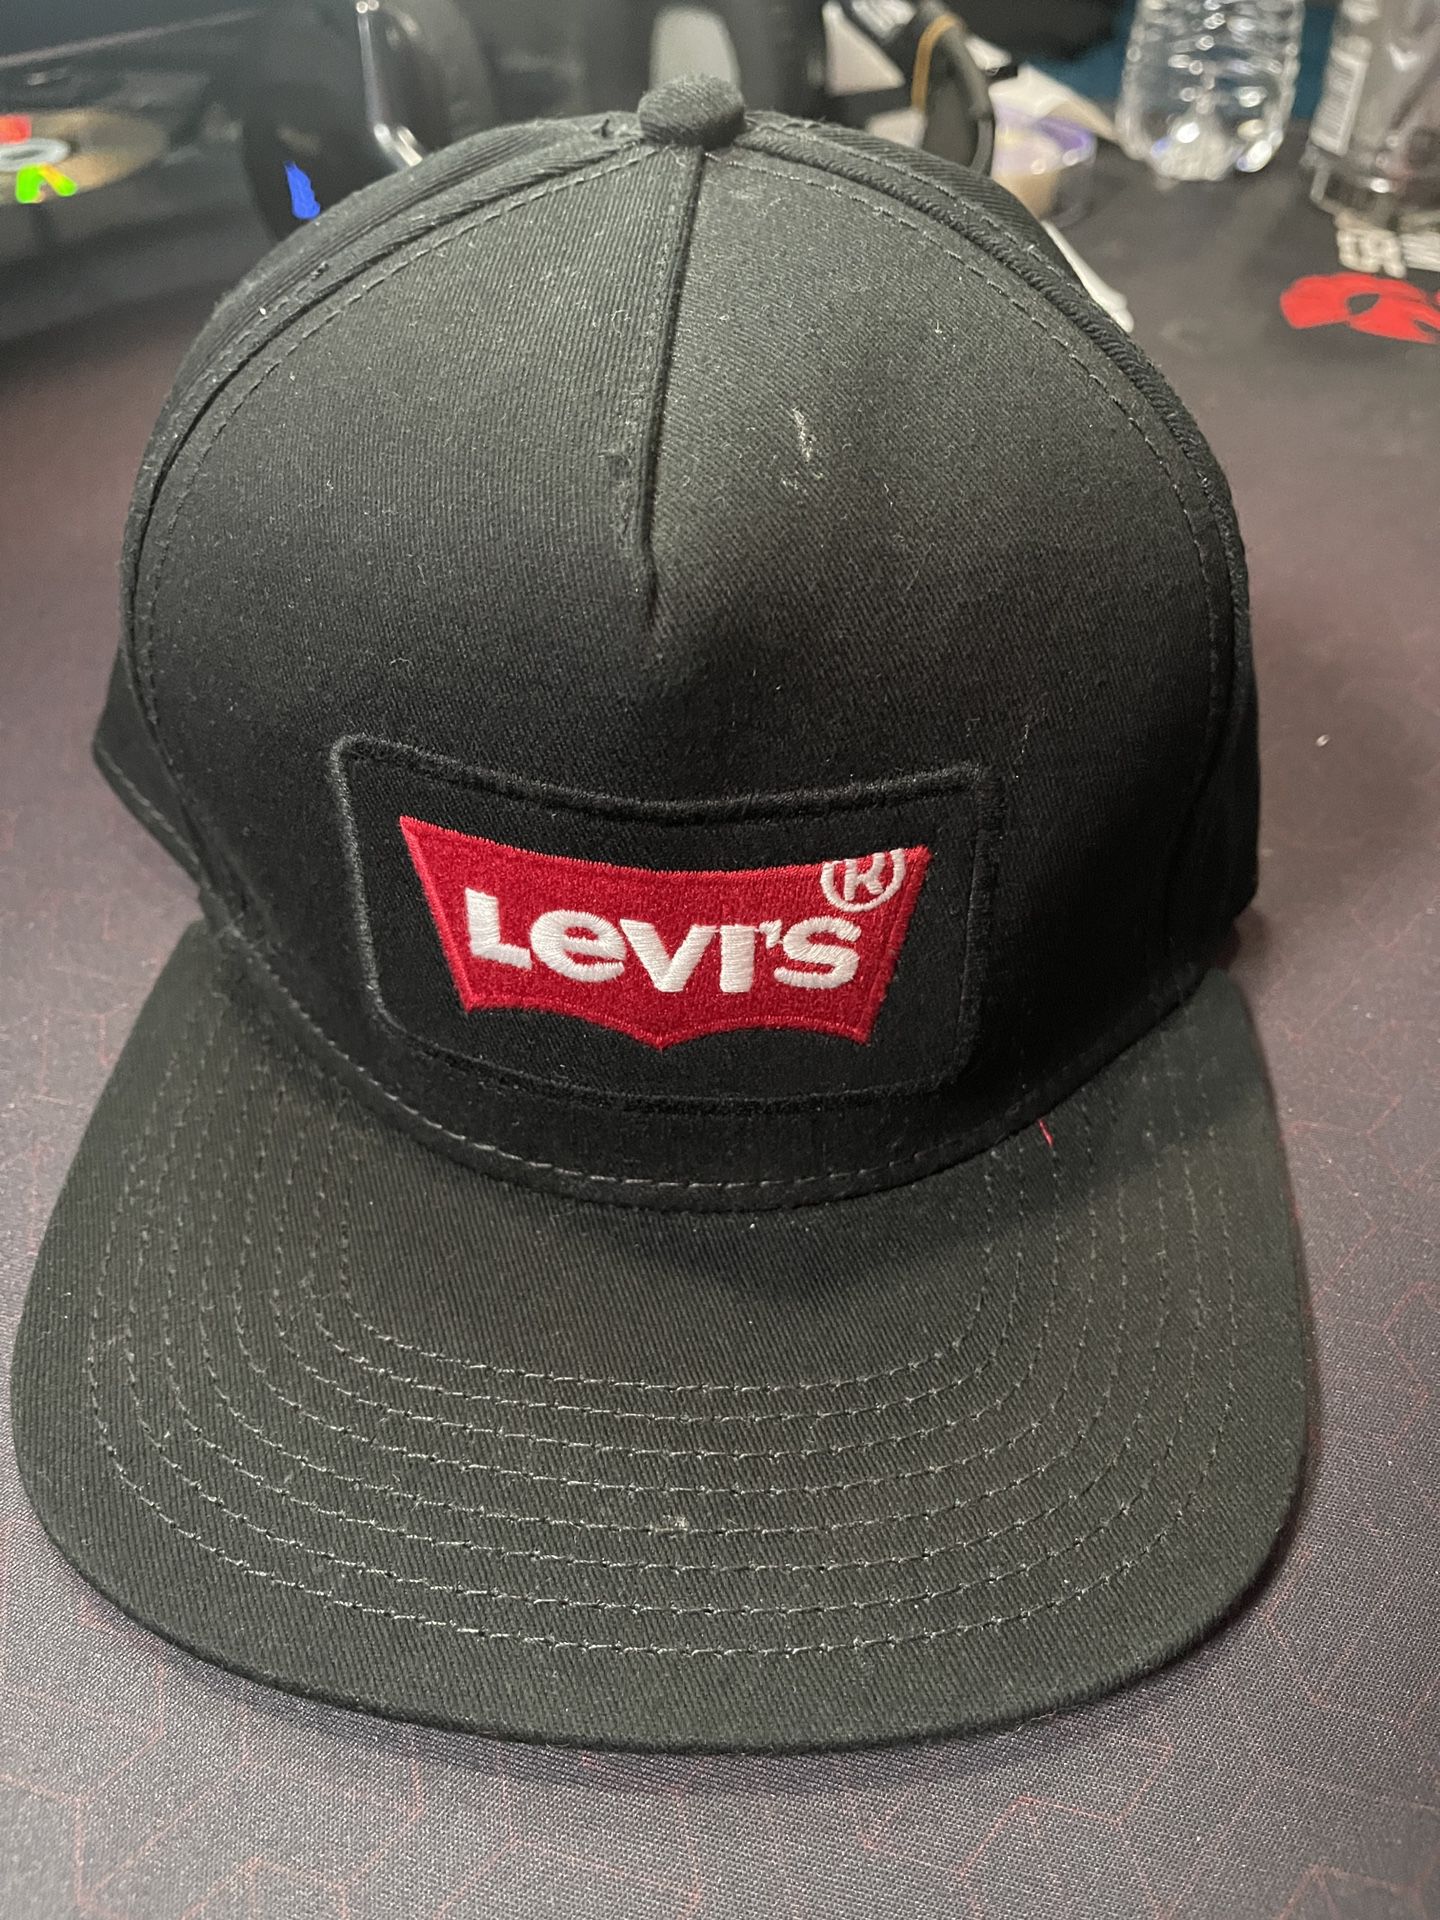 Levi’s Black and Red Snapback Adjustable